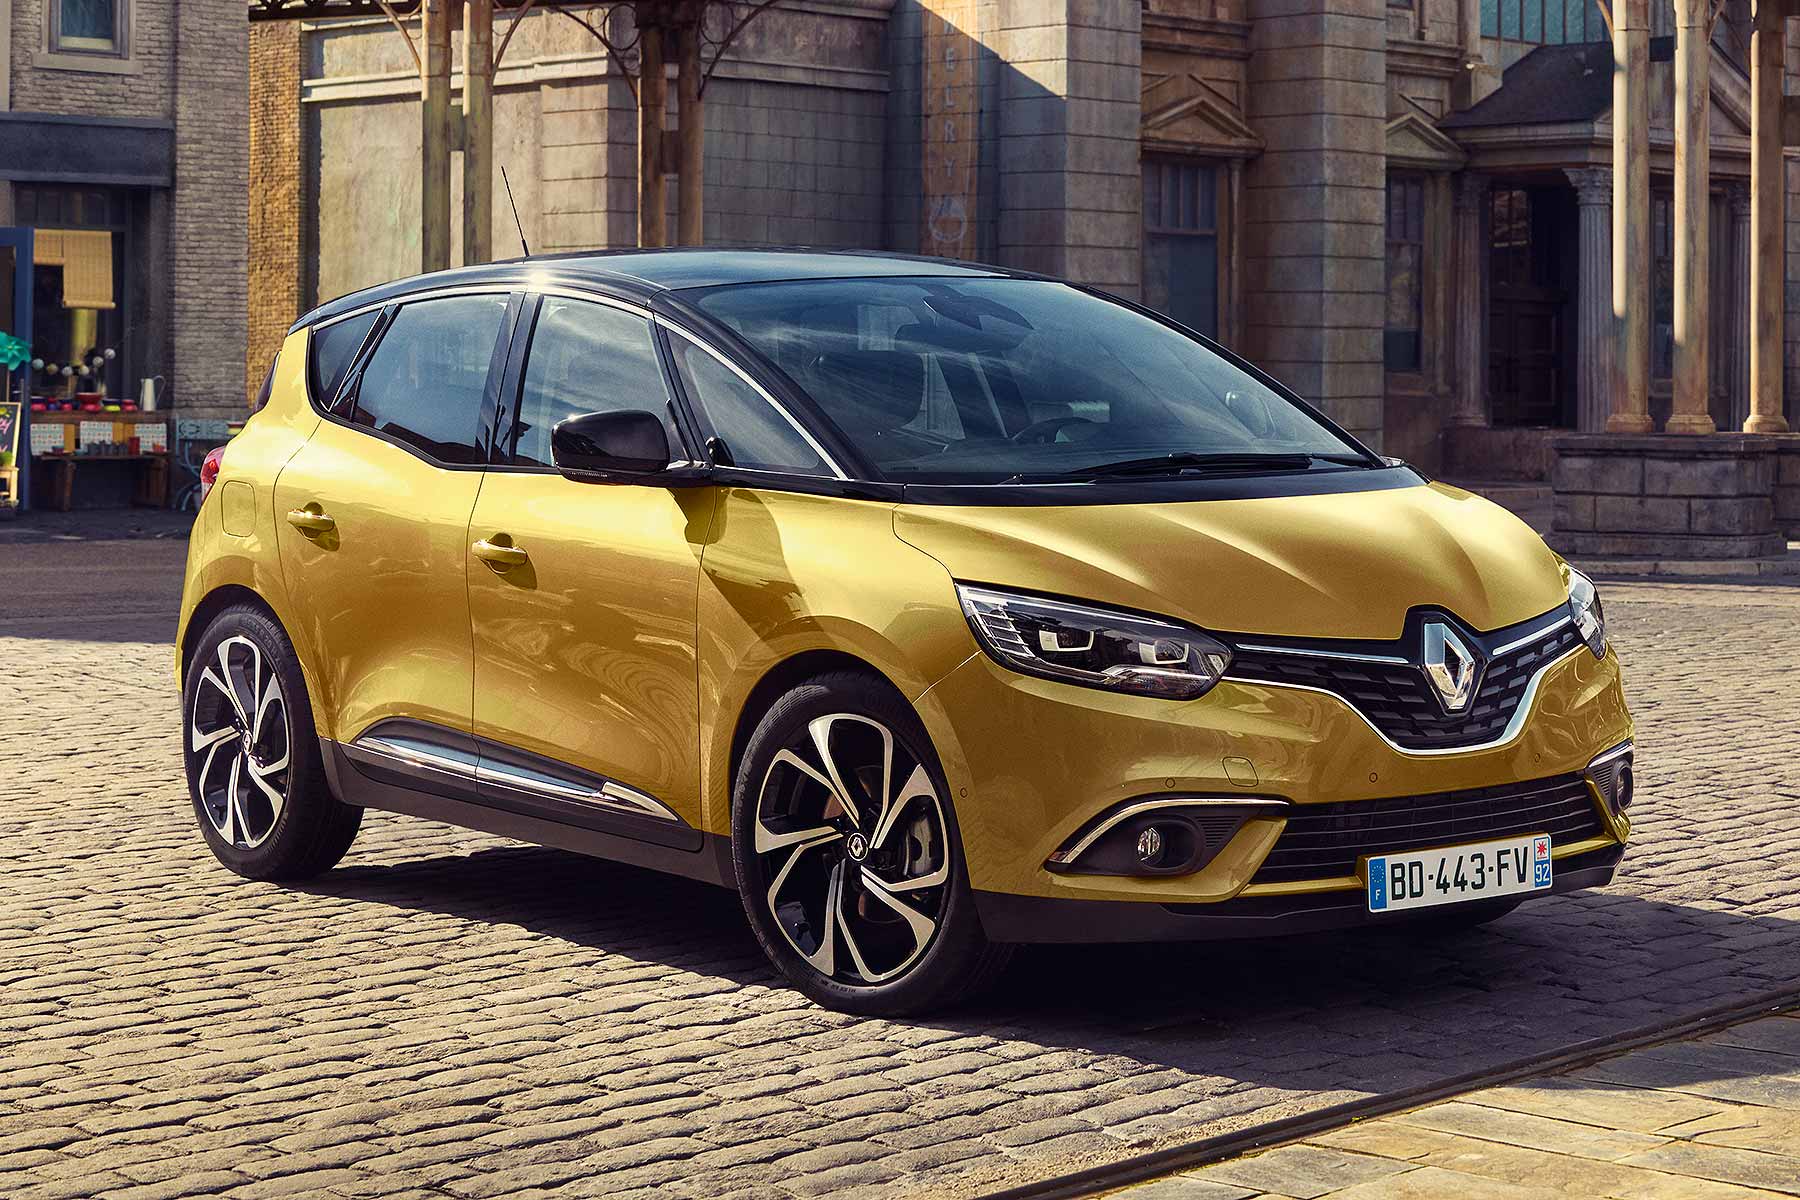 New Renault Scenic revealed ahead of Geneva 2016 debut